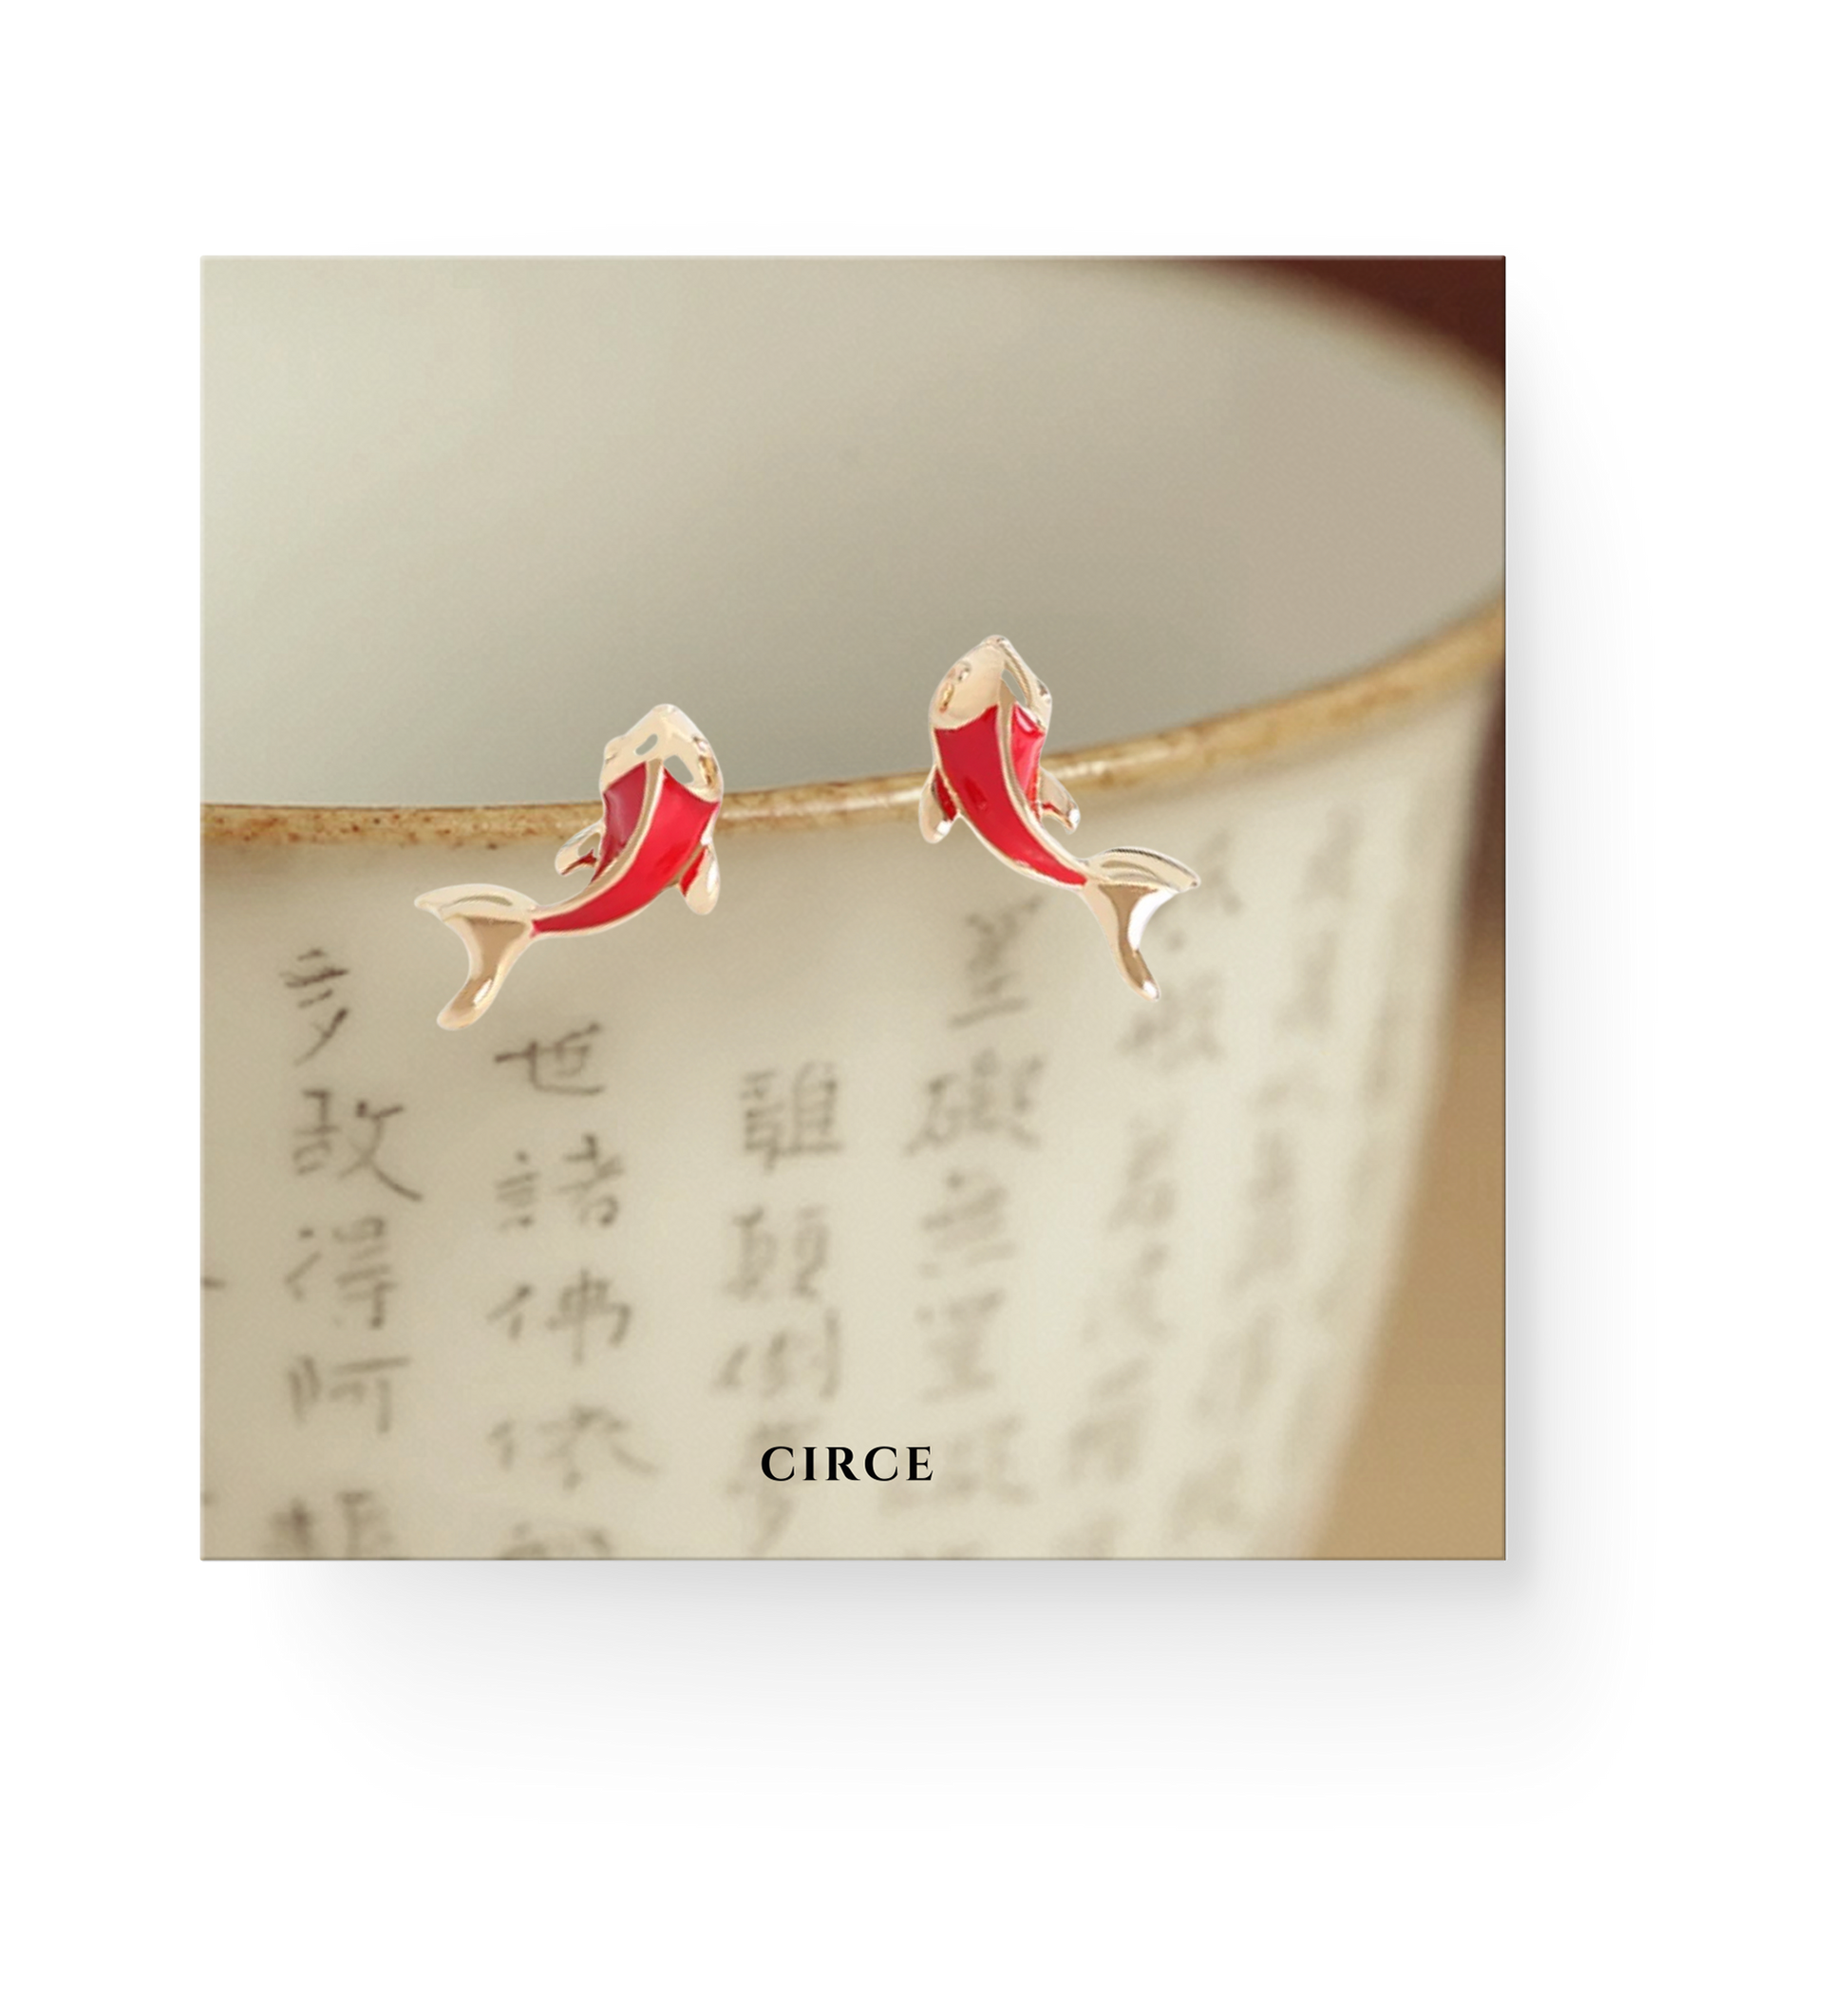 E183 - Lucky Koi Fish Stud Earrings - Jewelry  from Shein